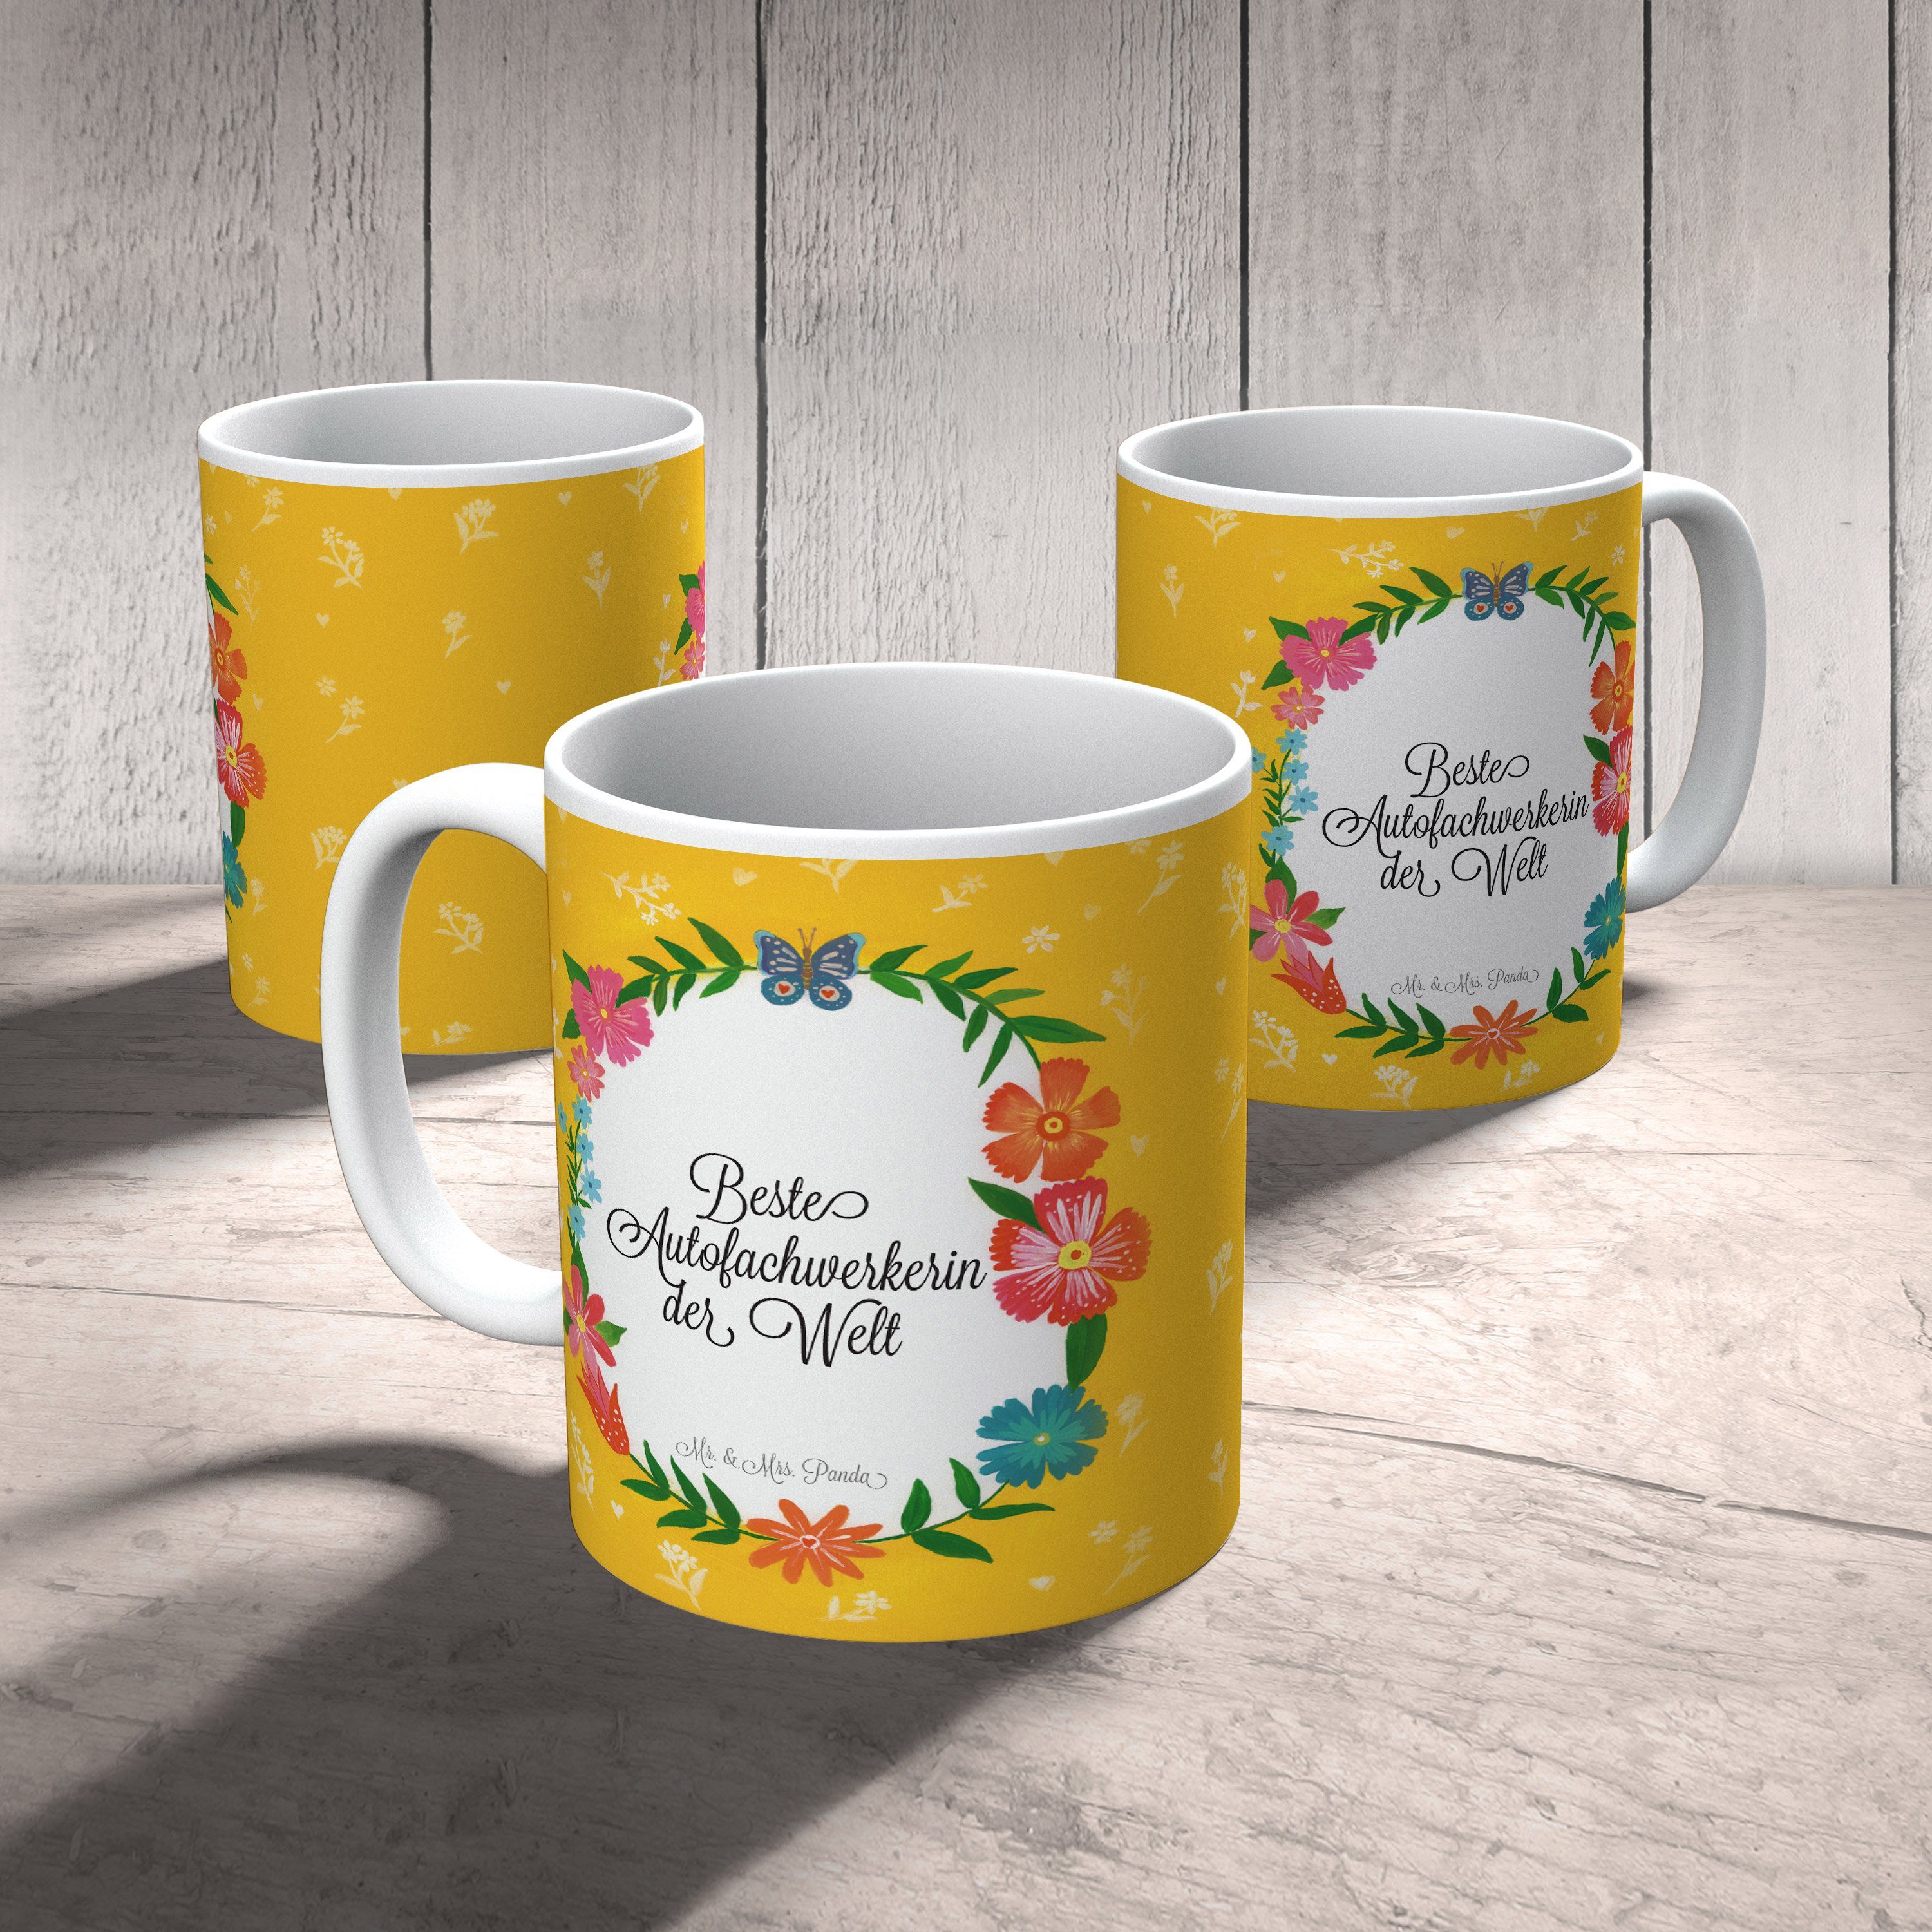 Mr. & Mrs. Panda Tasse Keramiktasse, Kaffeebecher, Keramik Tasse Geschenk, - Motive, Autofachwerkerin